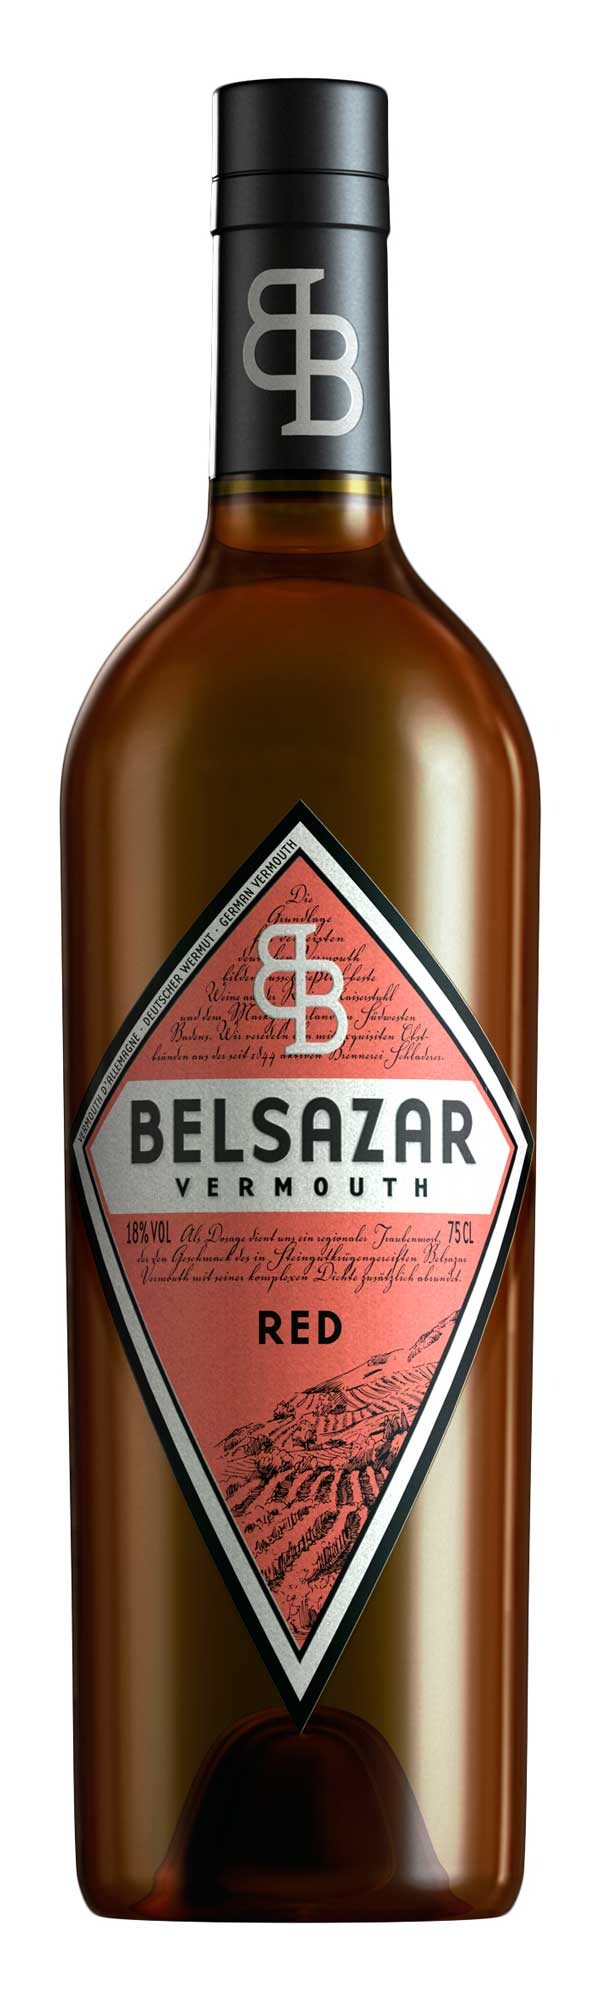 Vermouth Belsazar Red 75cl 18%